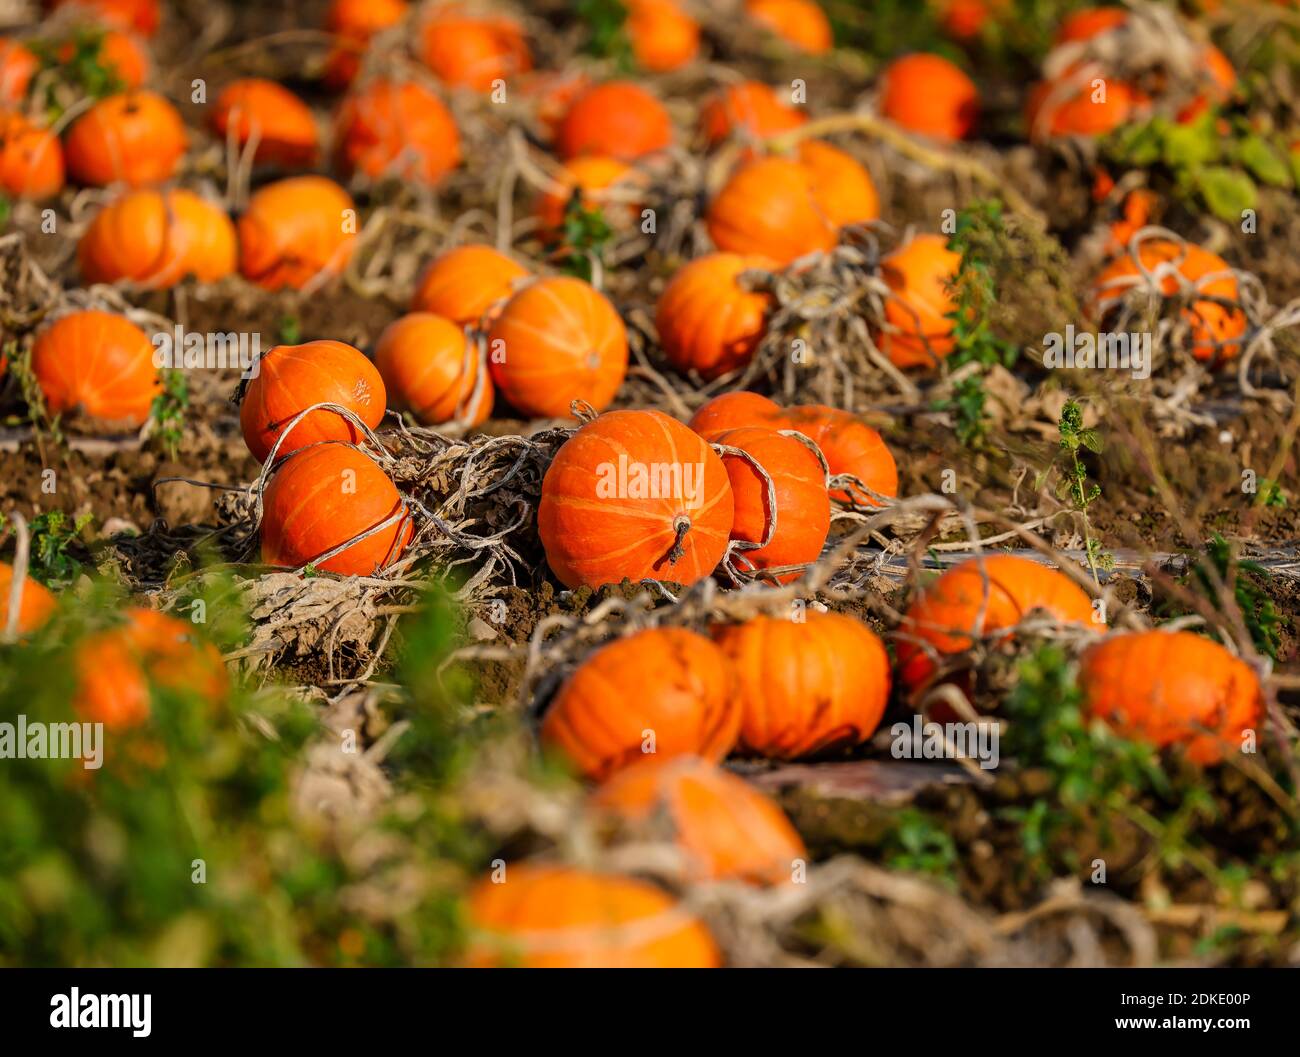 Koeln, North Rhine-Westphalia, Germany - Pumpkin field, Hokkaido pumpkins growing in a field. Stock Photo